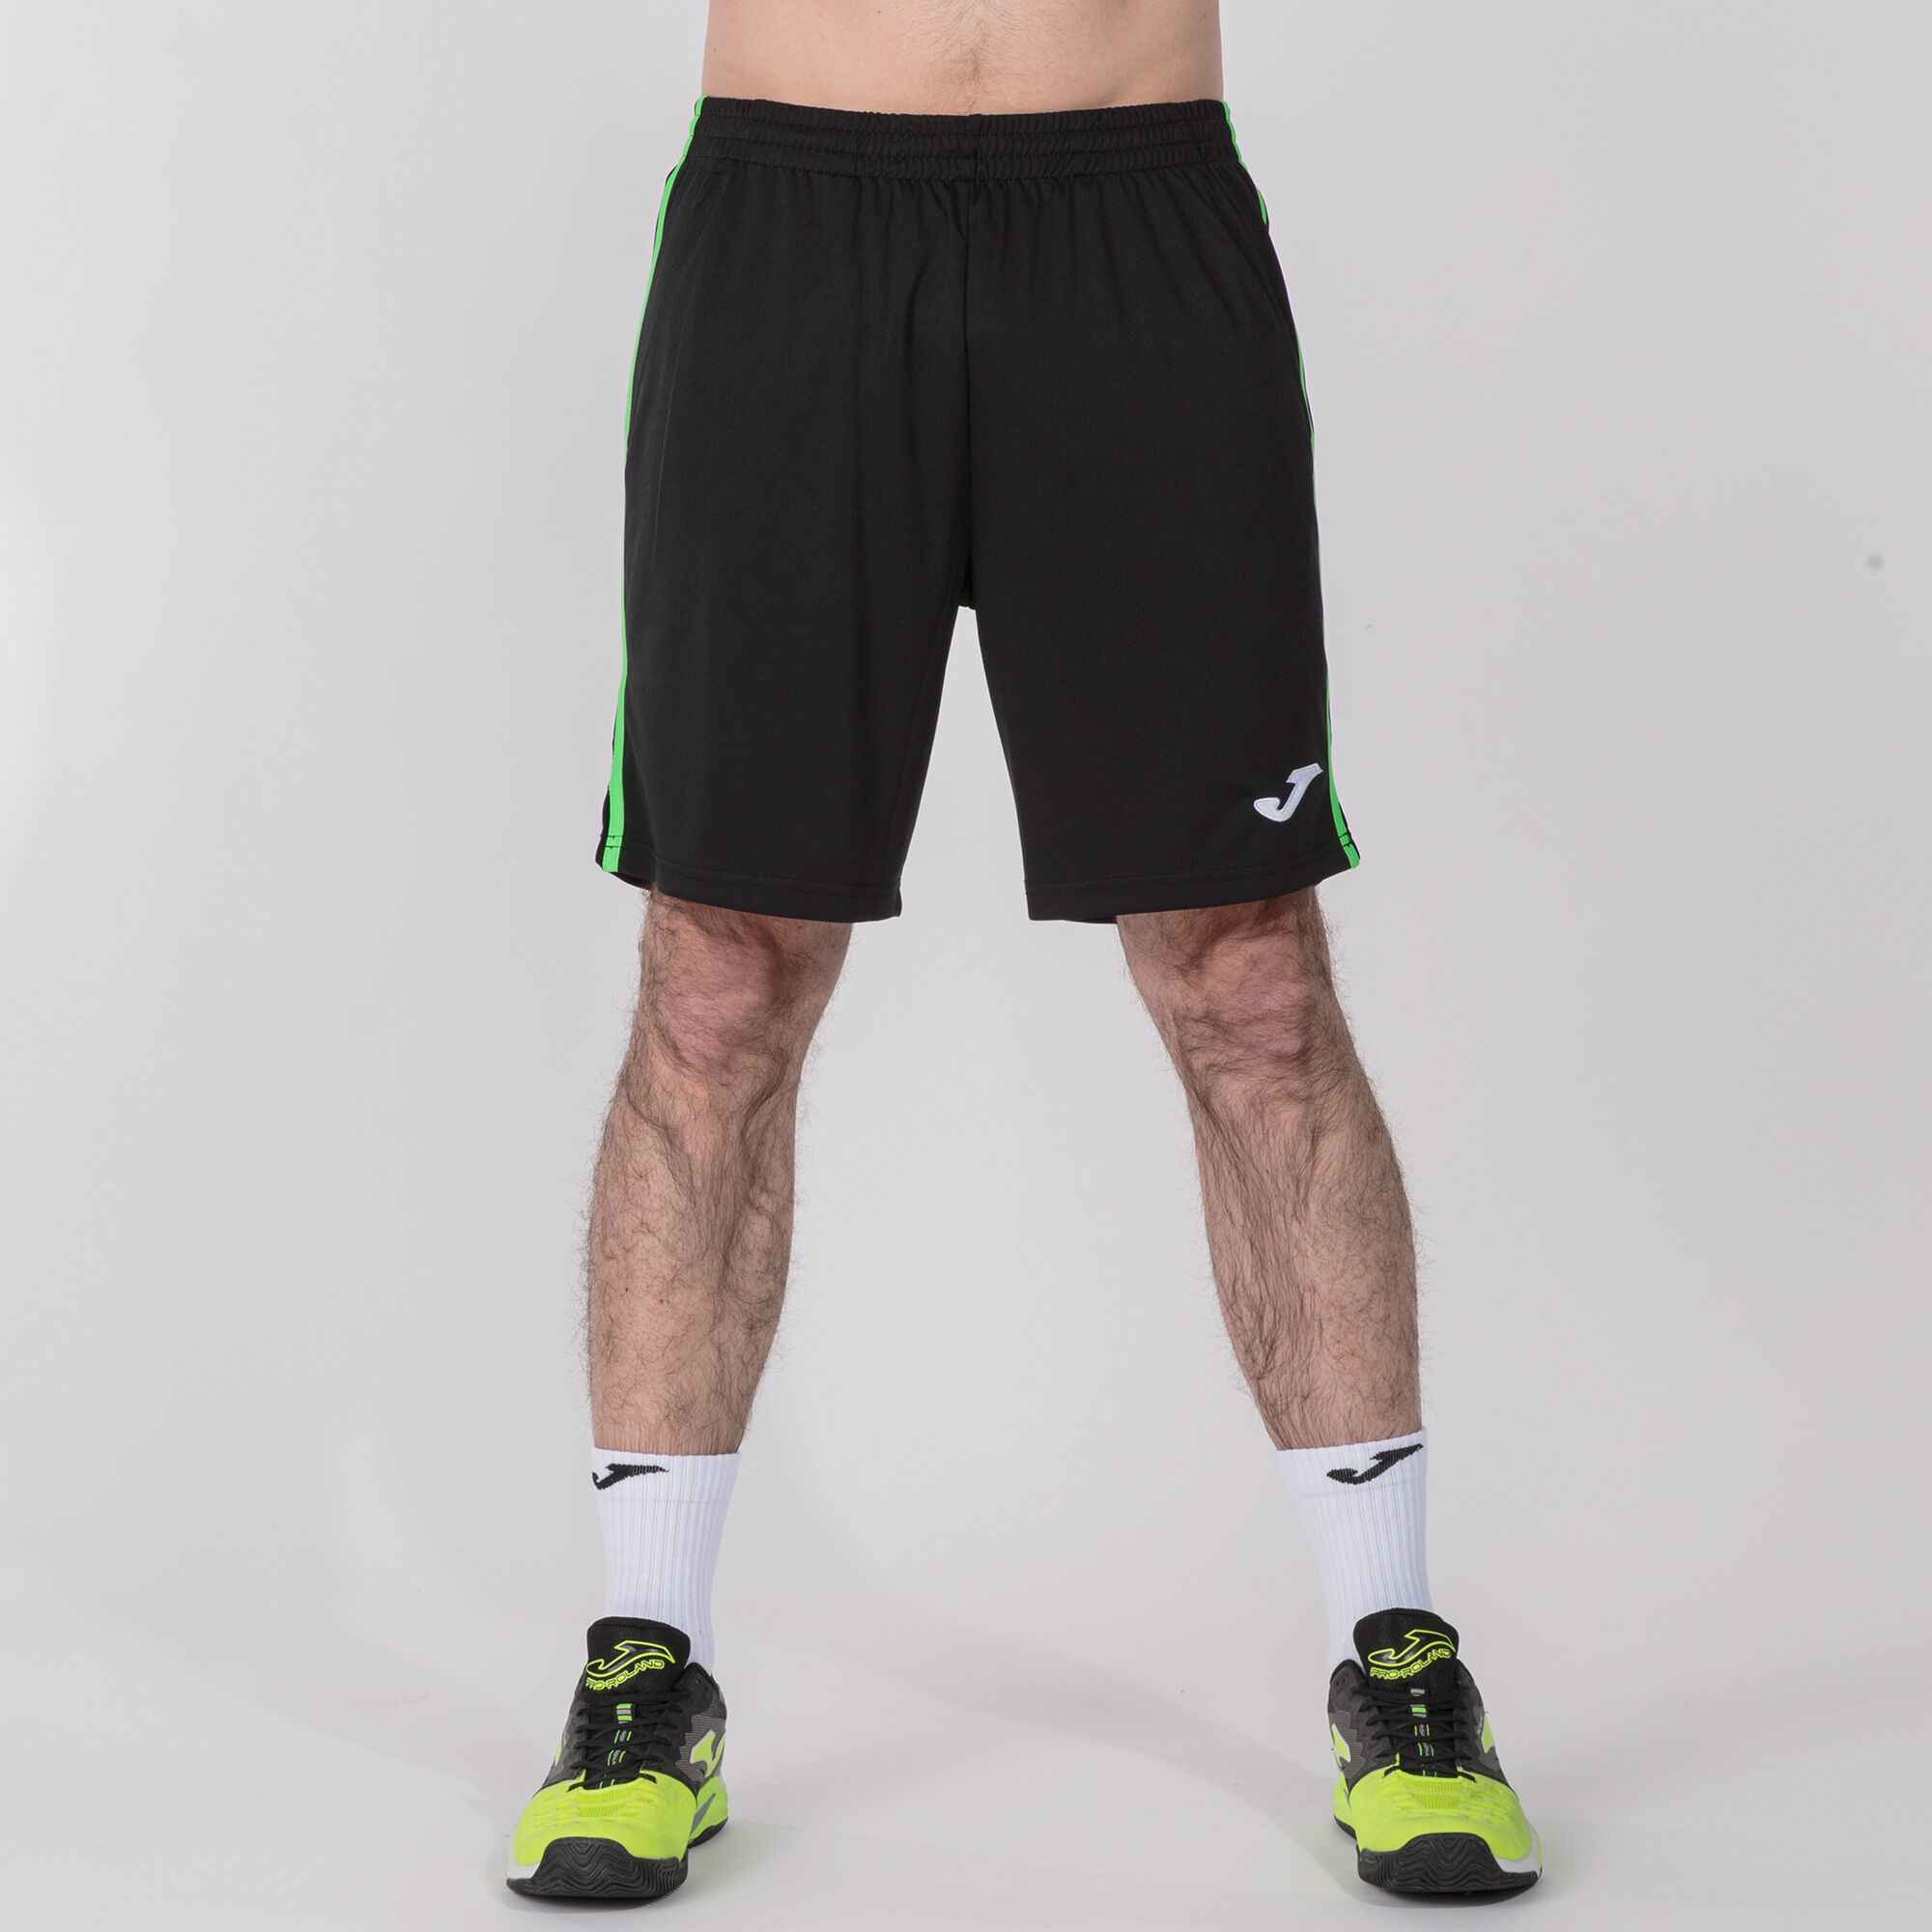 Bermuda shorts man Open III black fluorescent green